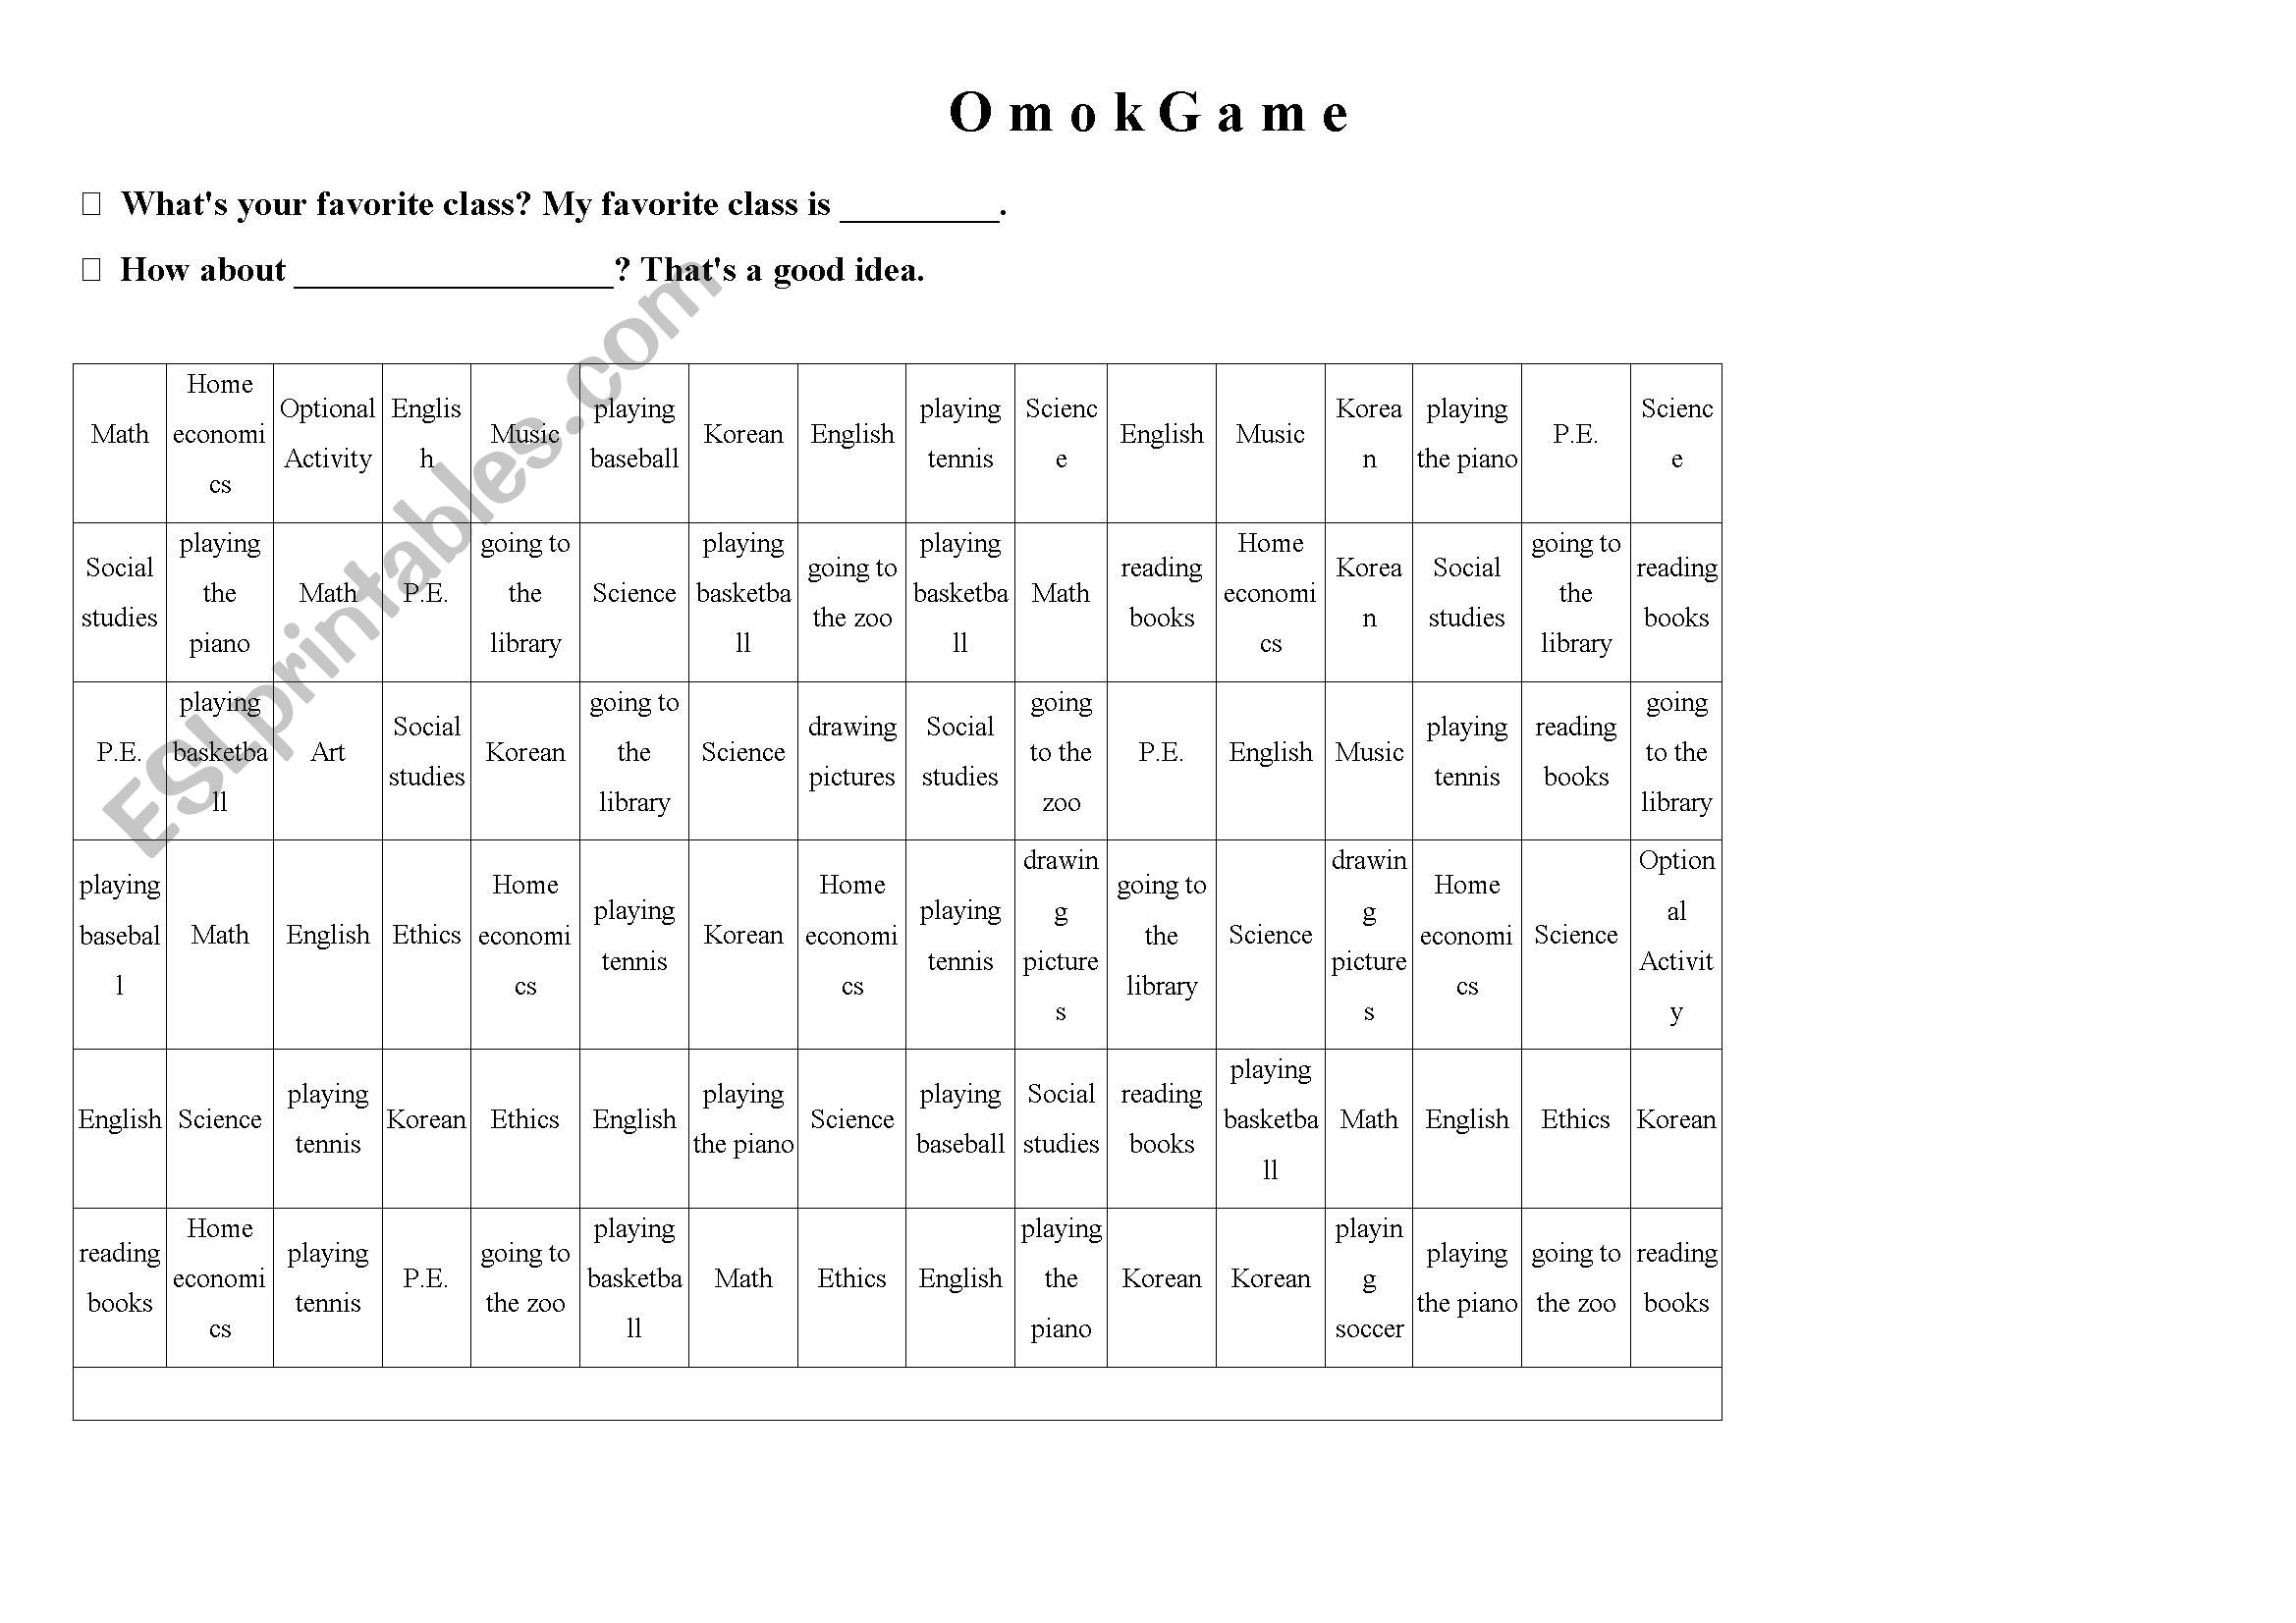 omokgame worksheet